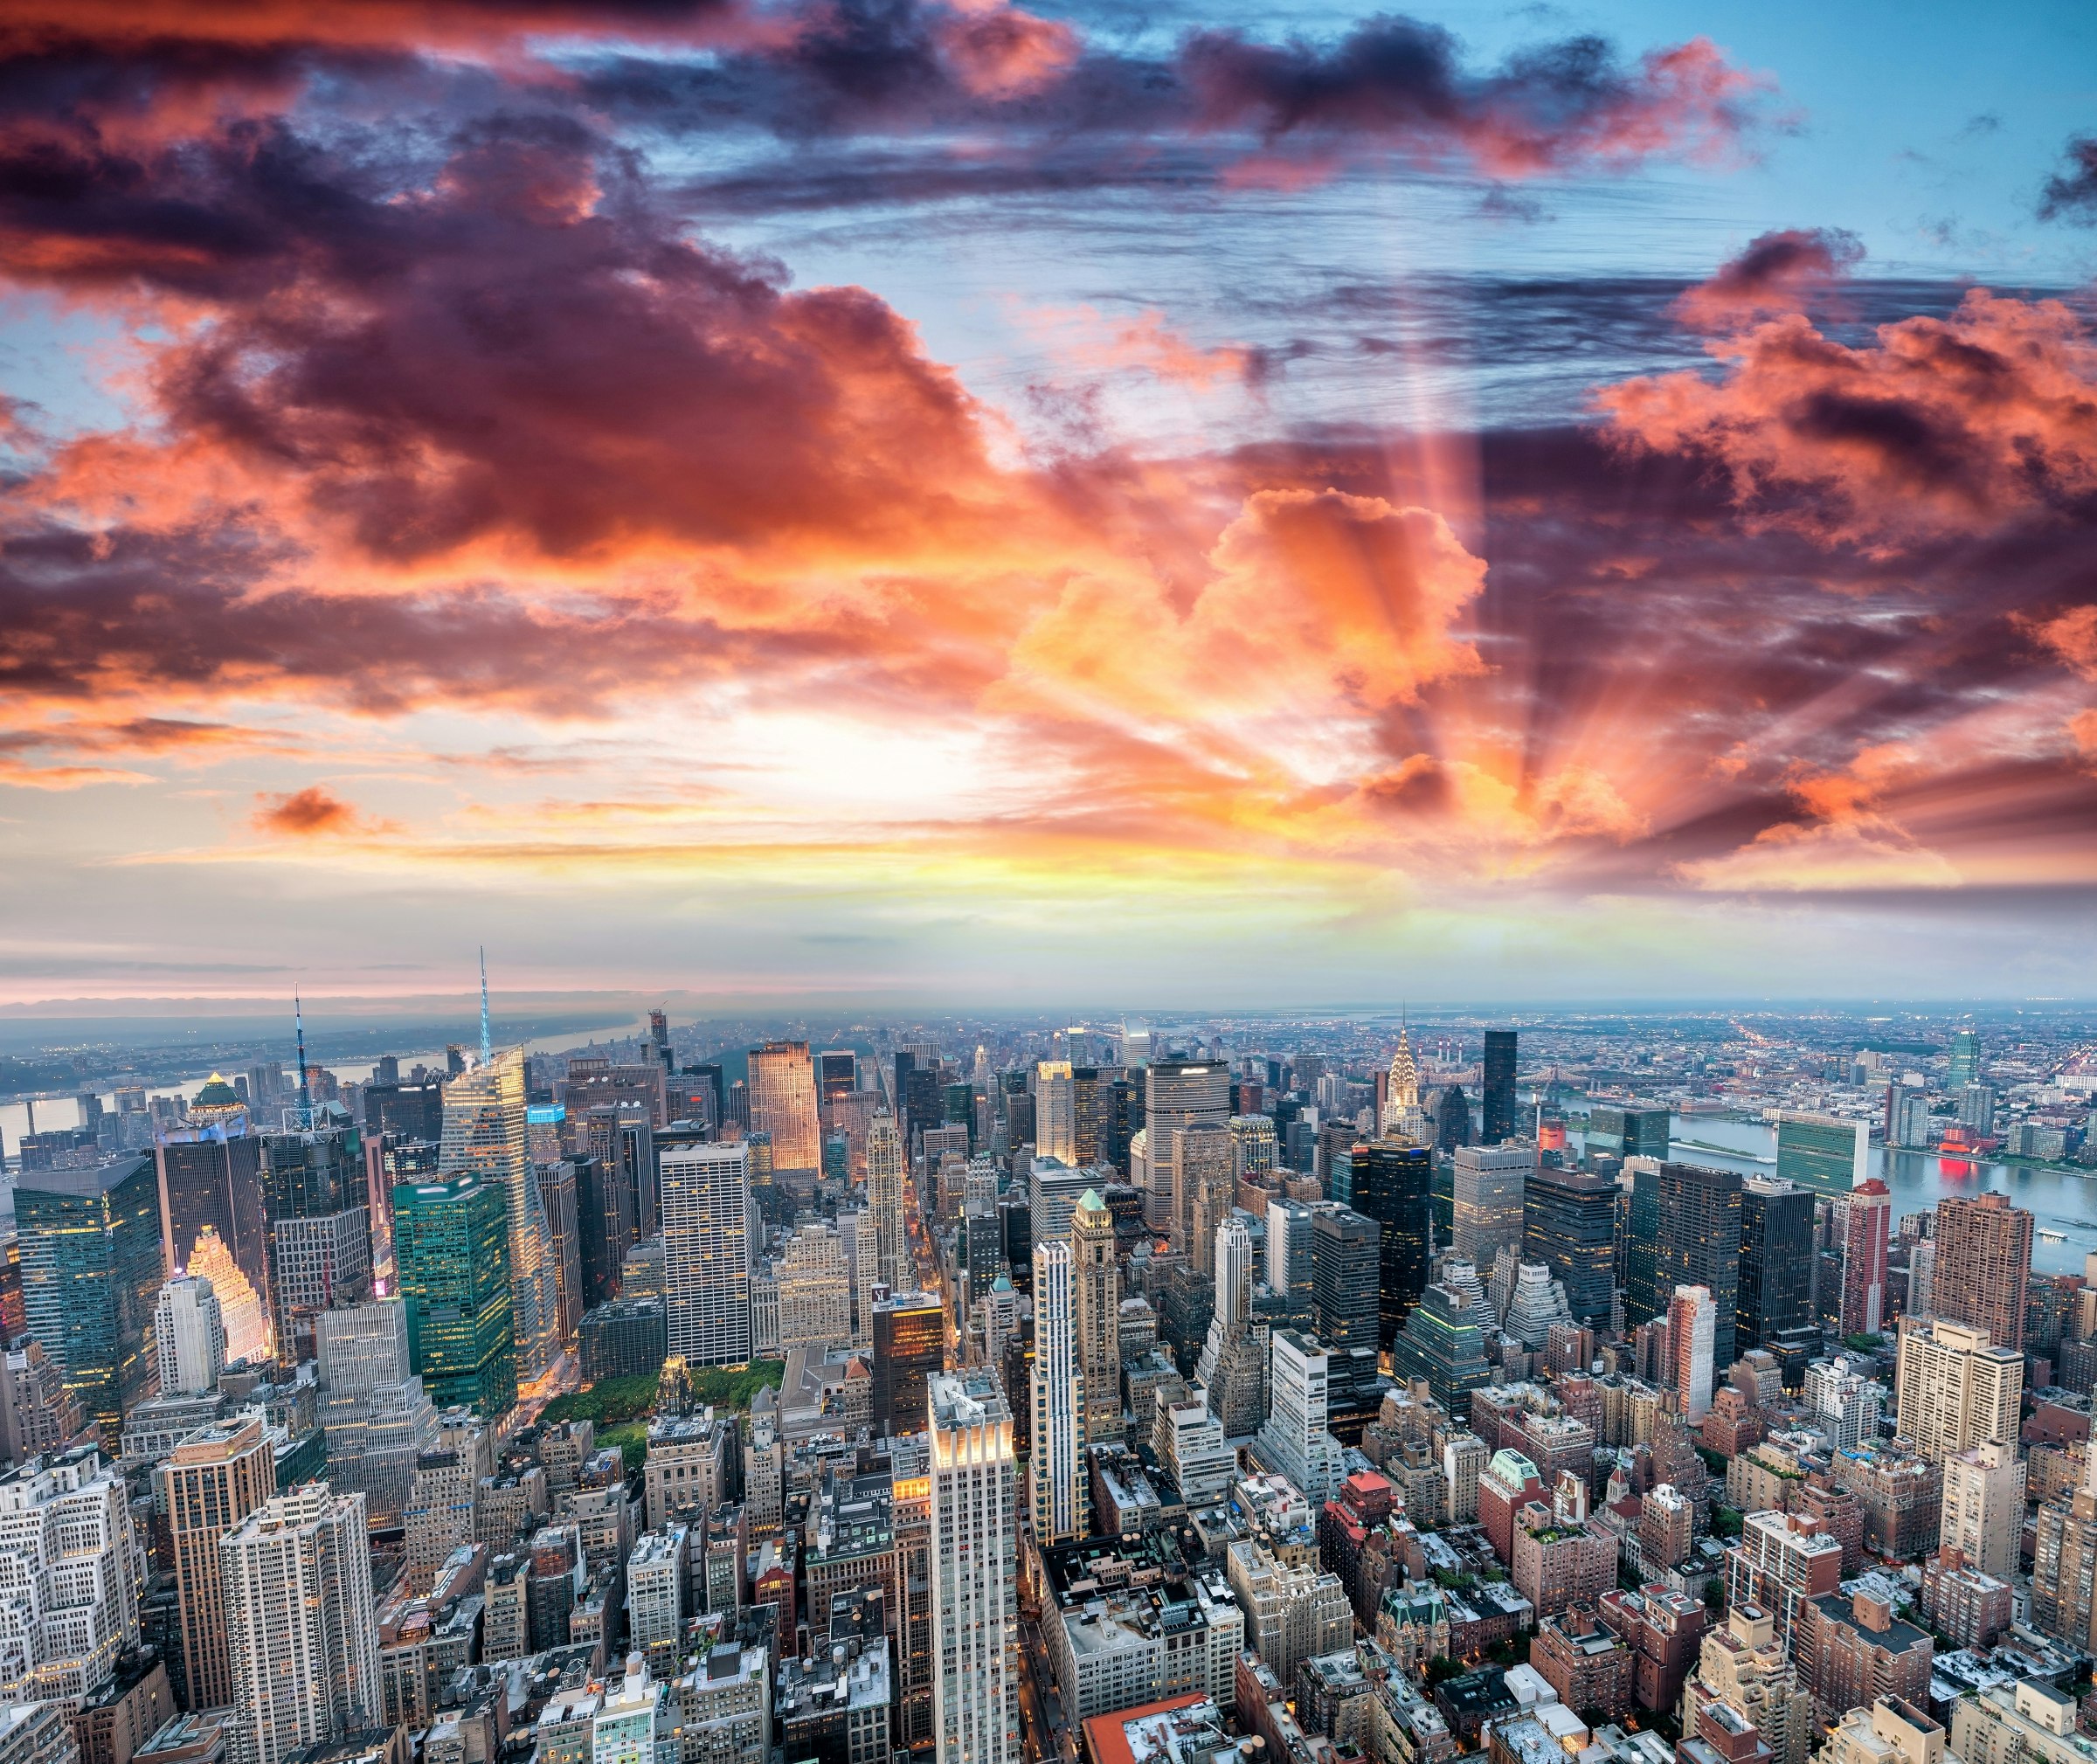 The Manhattan skyline at sunset in New York City.